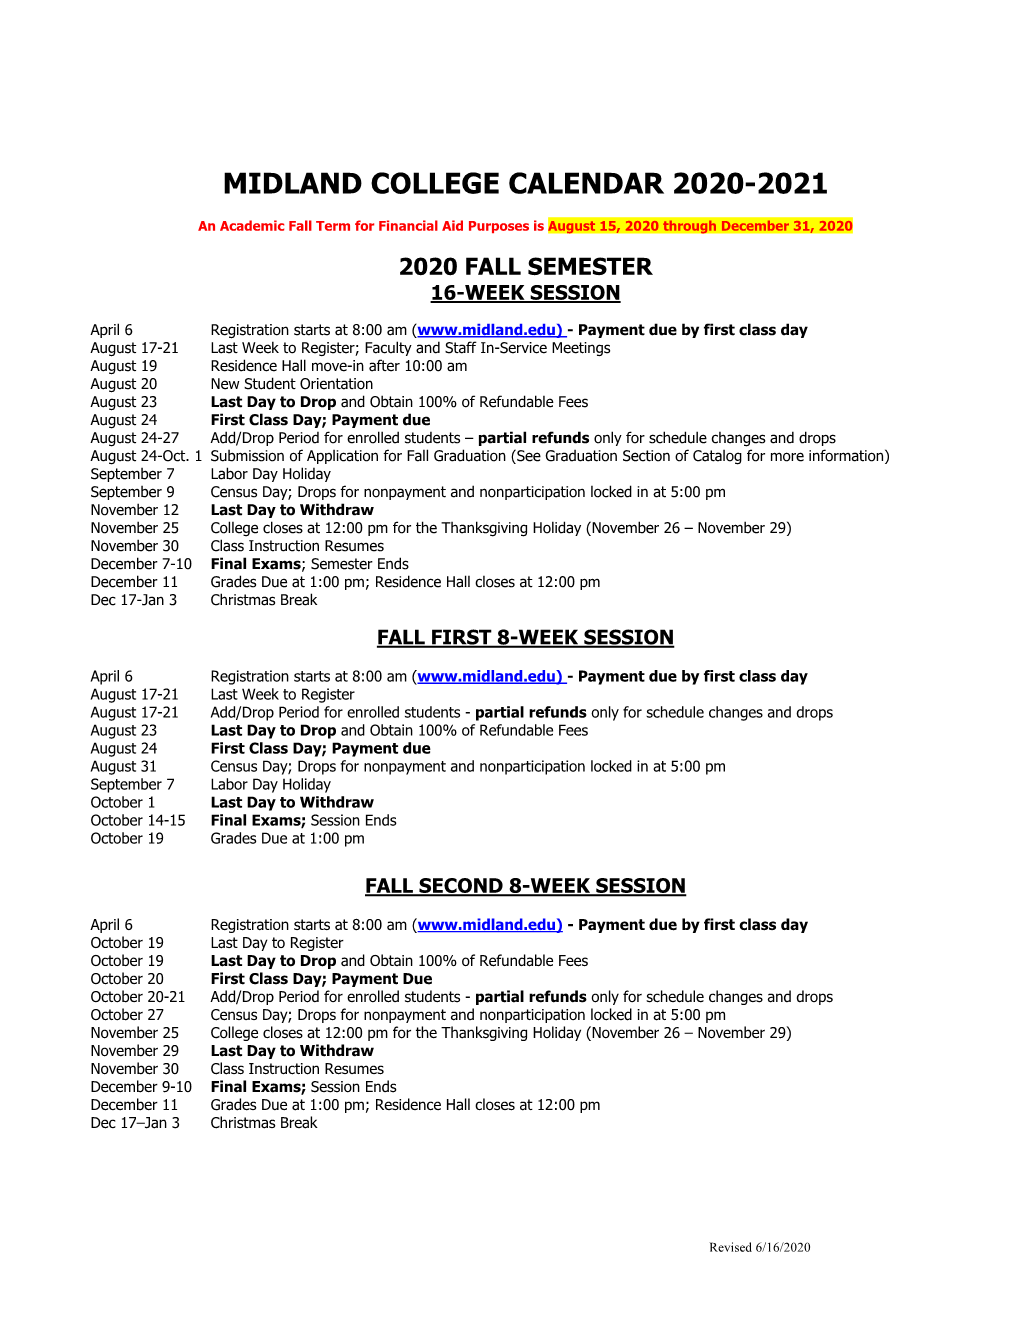 Midland College Academic Calendar for 2020-2021